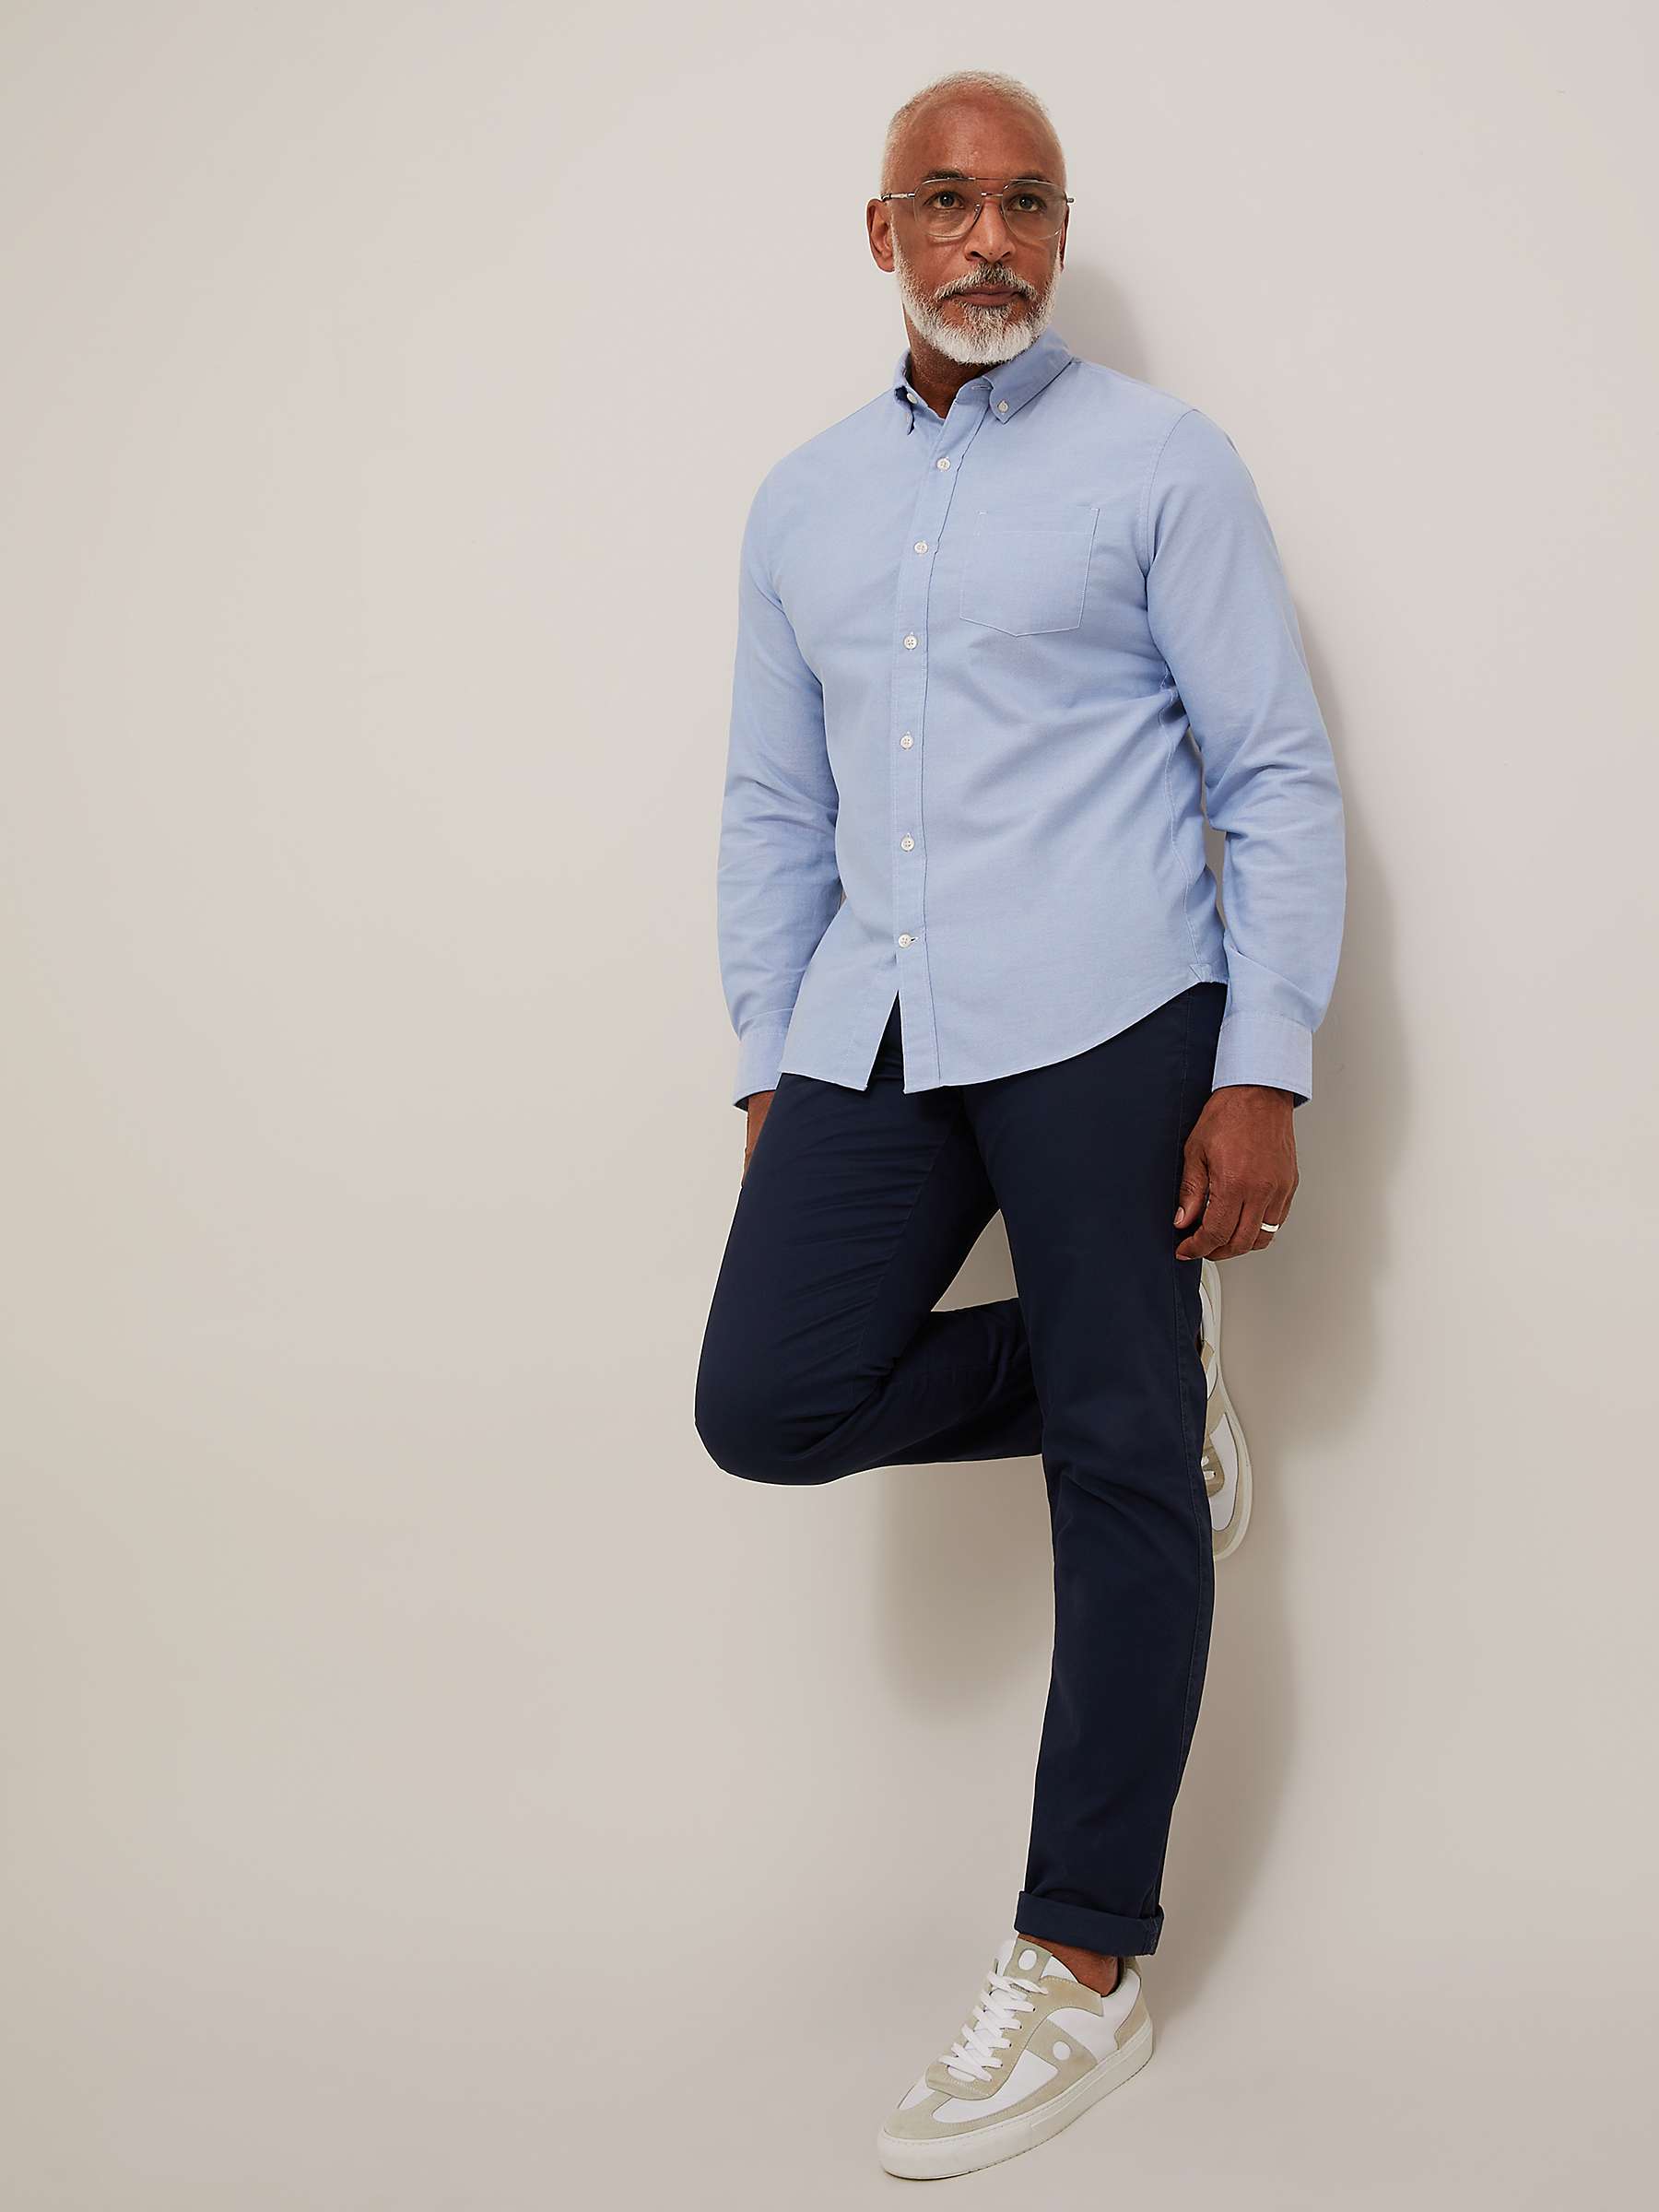 Buy John Lewis & Partners Slim Fit Cotton Oxford Button Down Shirt Online at johnlewis.com